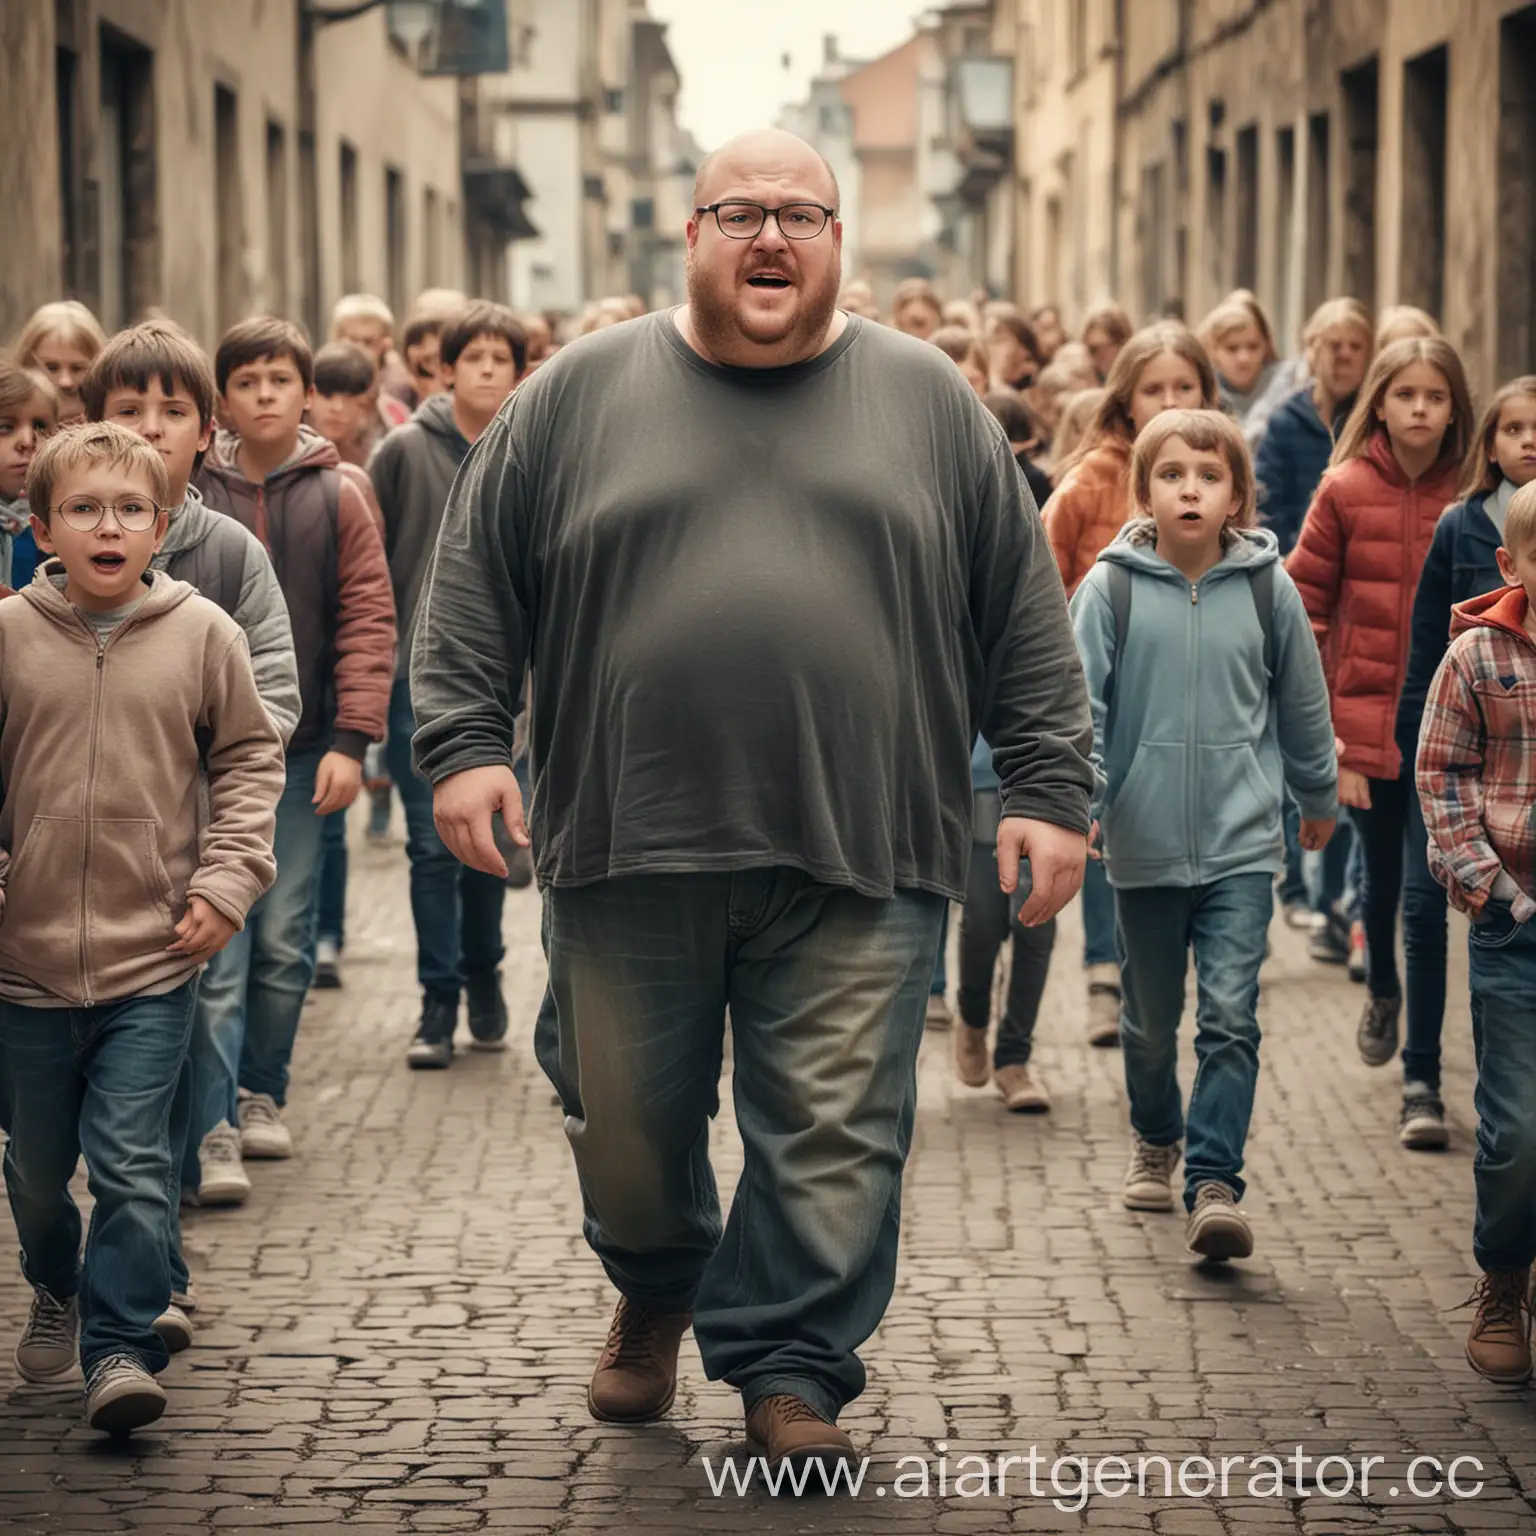 Cheerful-Bald-Man-Leads-Hungry-Children-on-a-Joyful-Walk